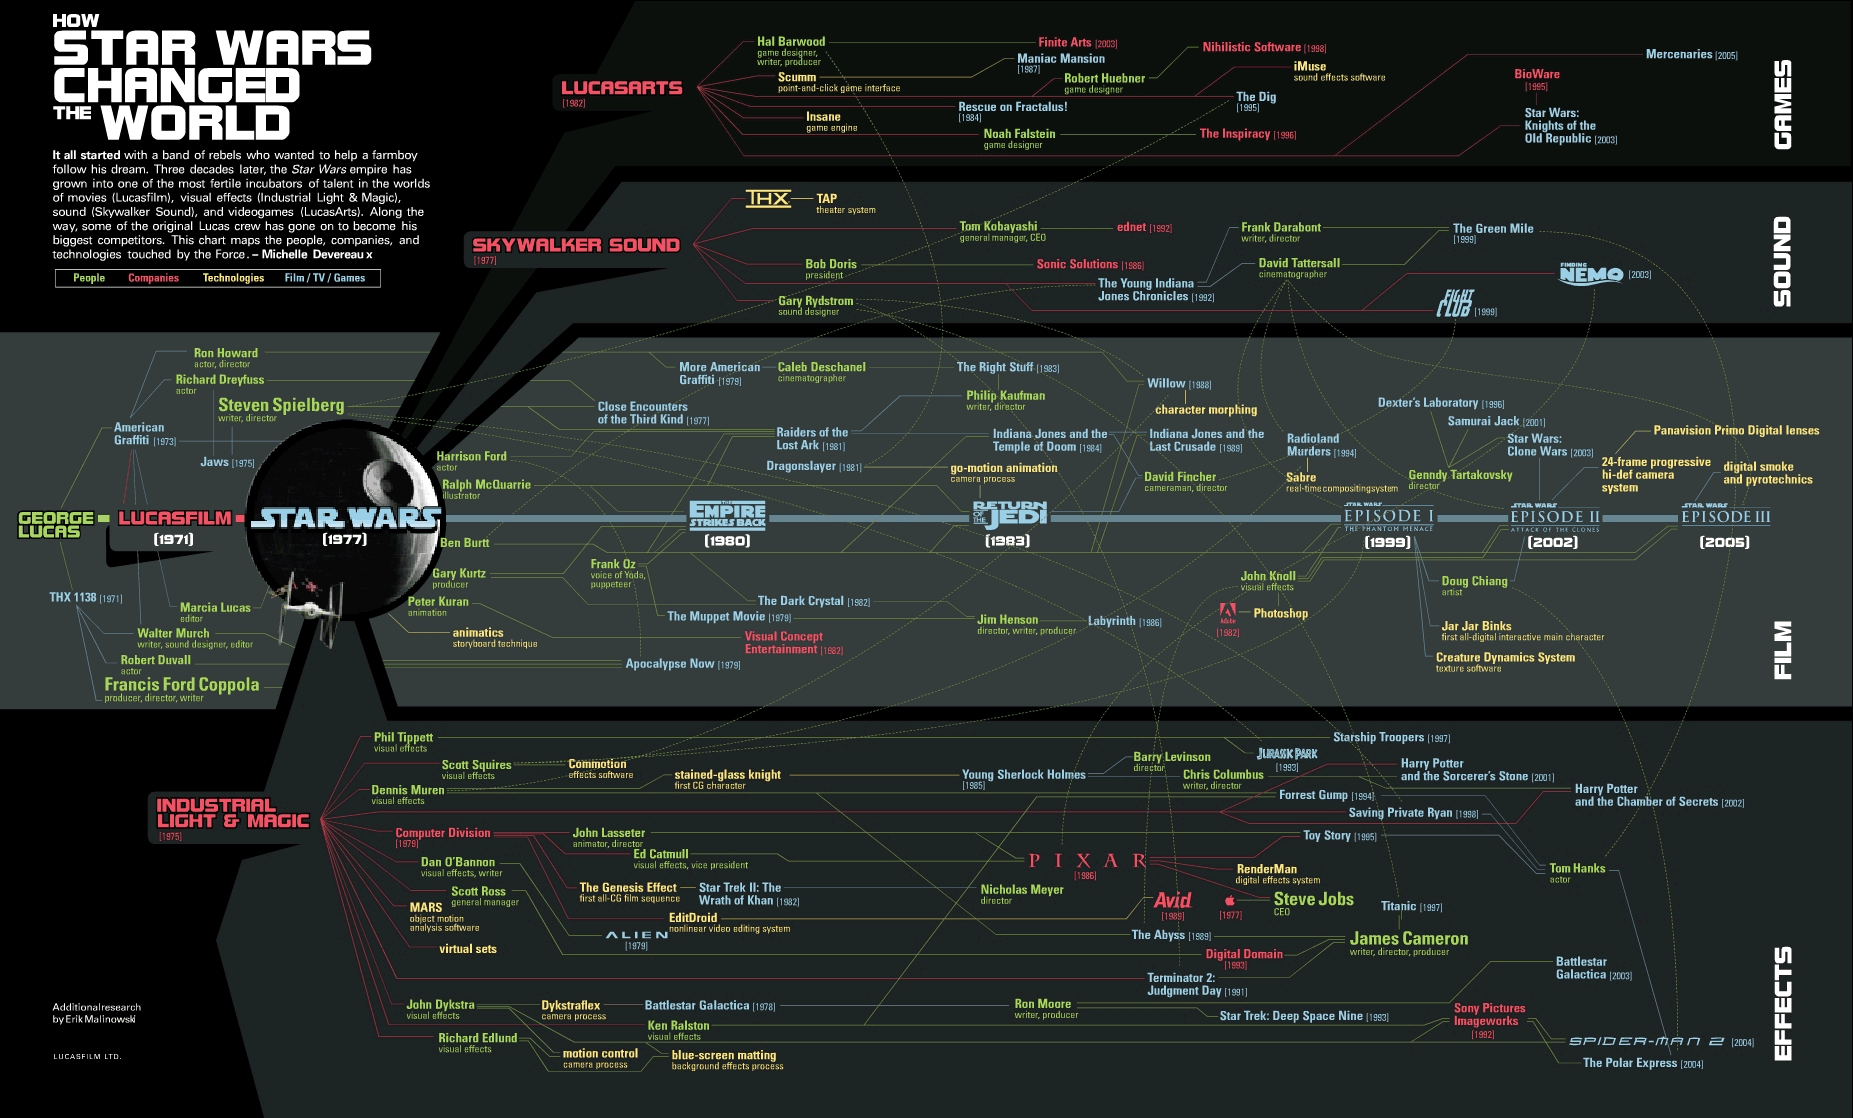 starwars_infographic_large